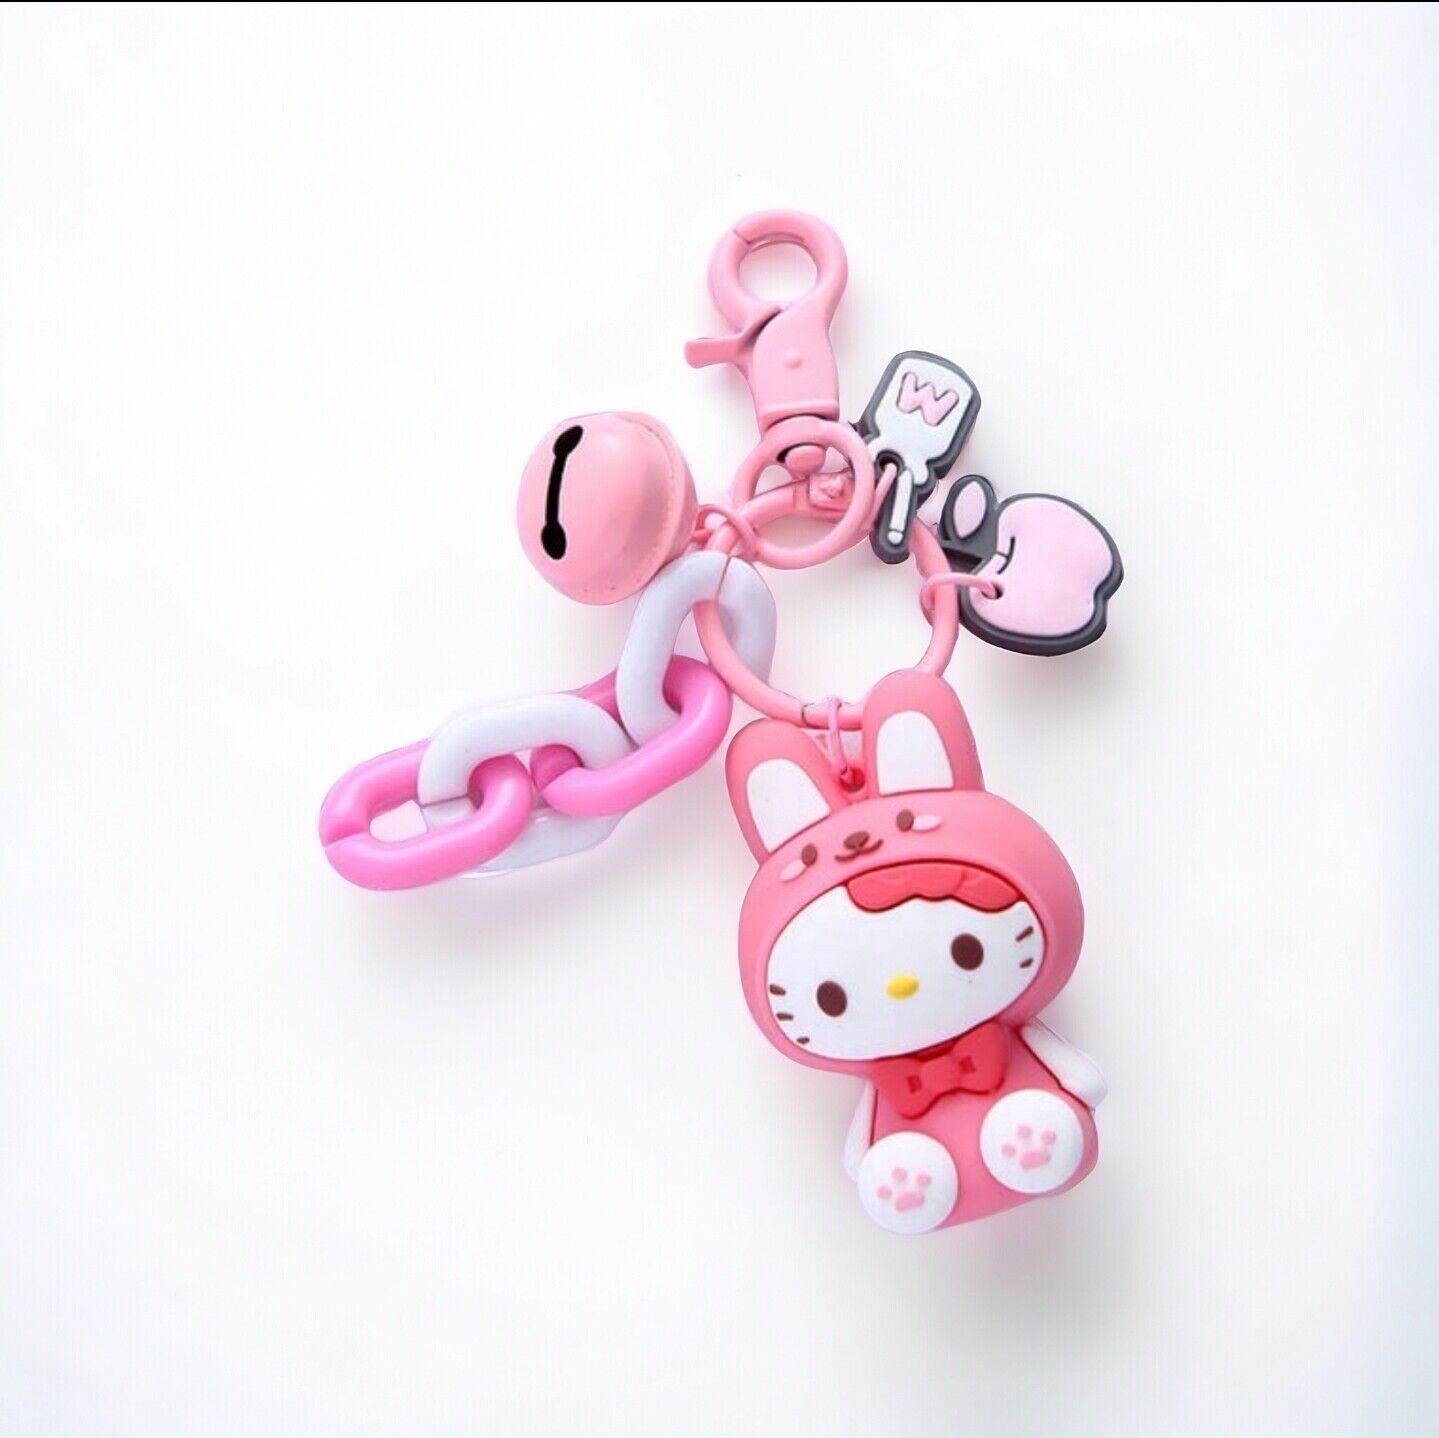 Cute Hello Kitty & Friends Keychain